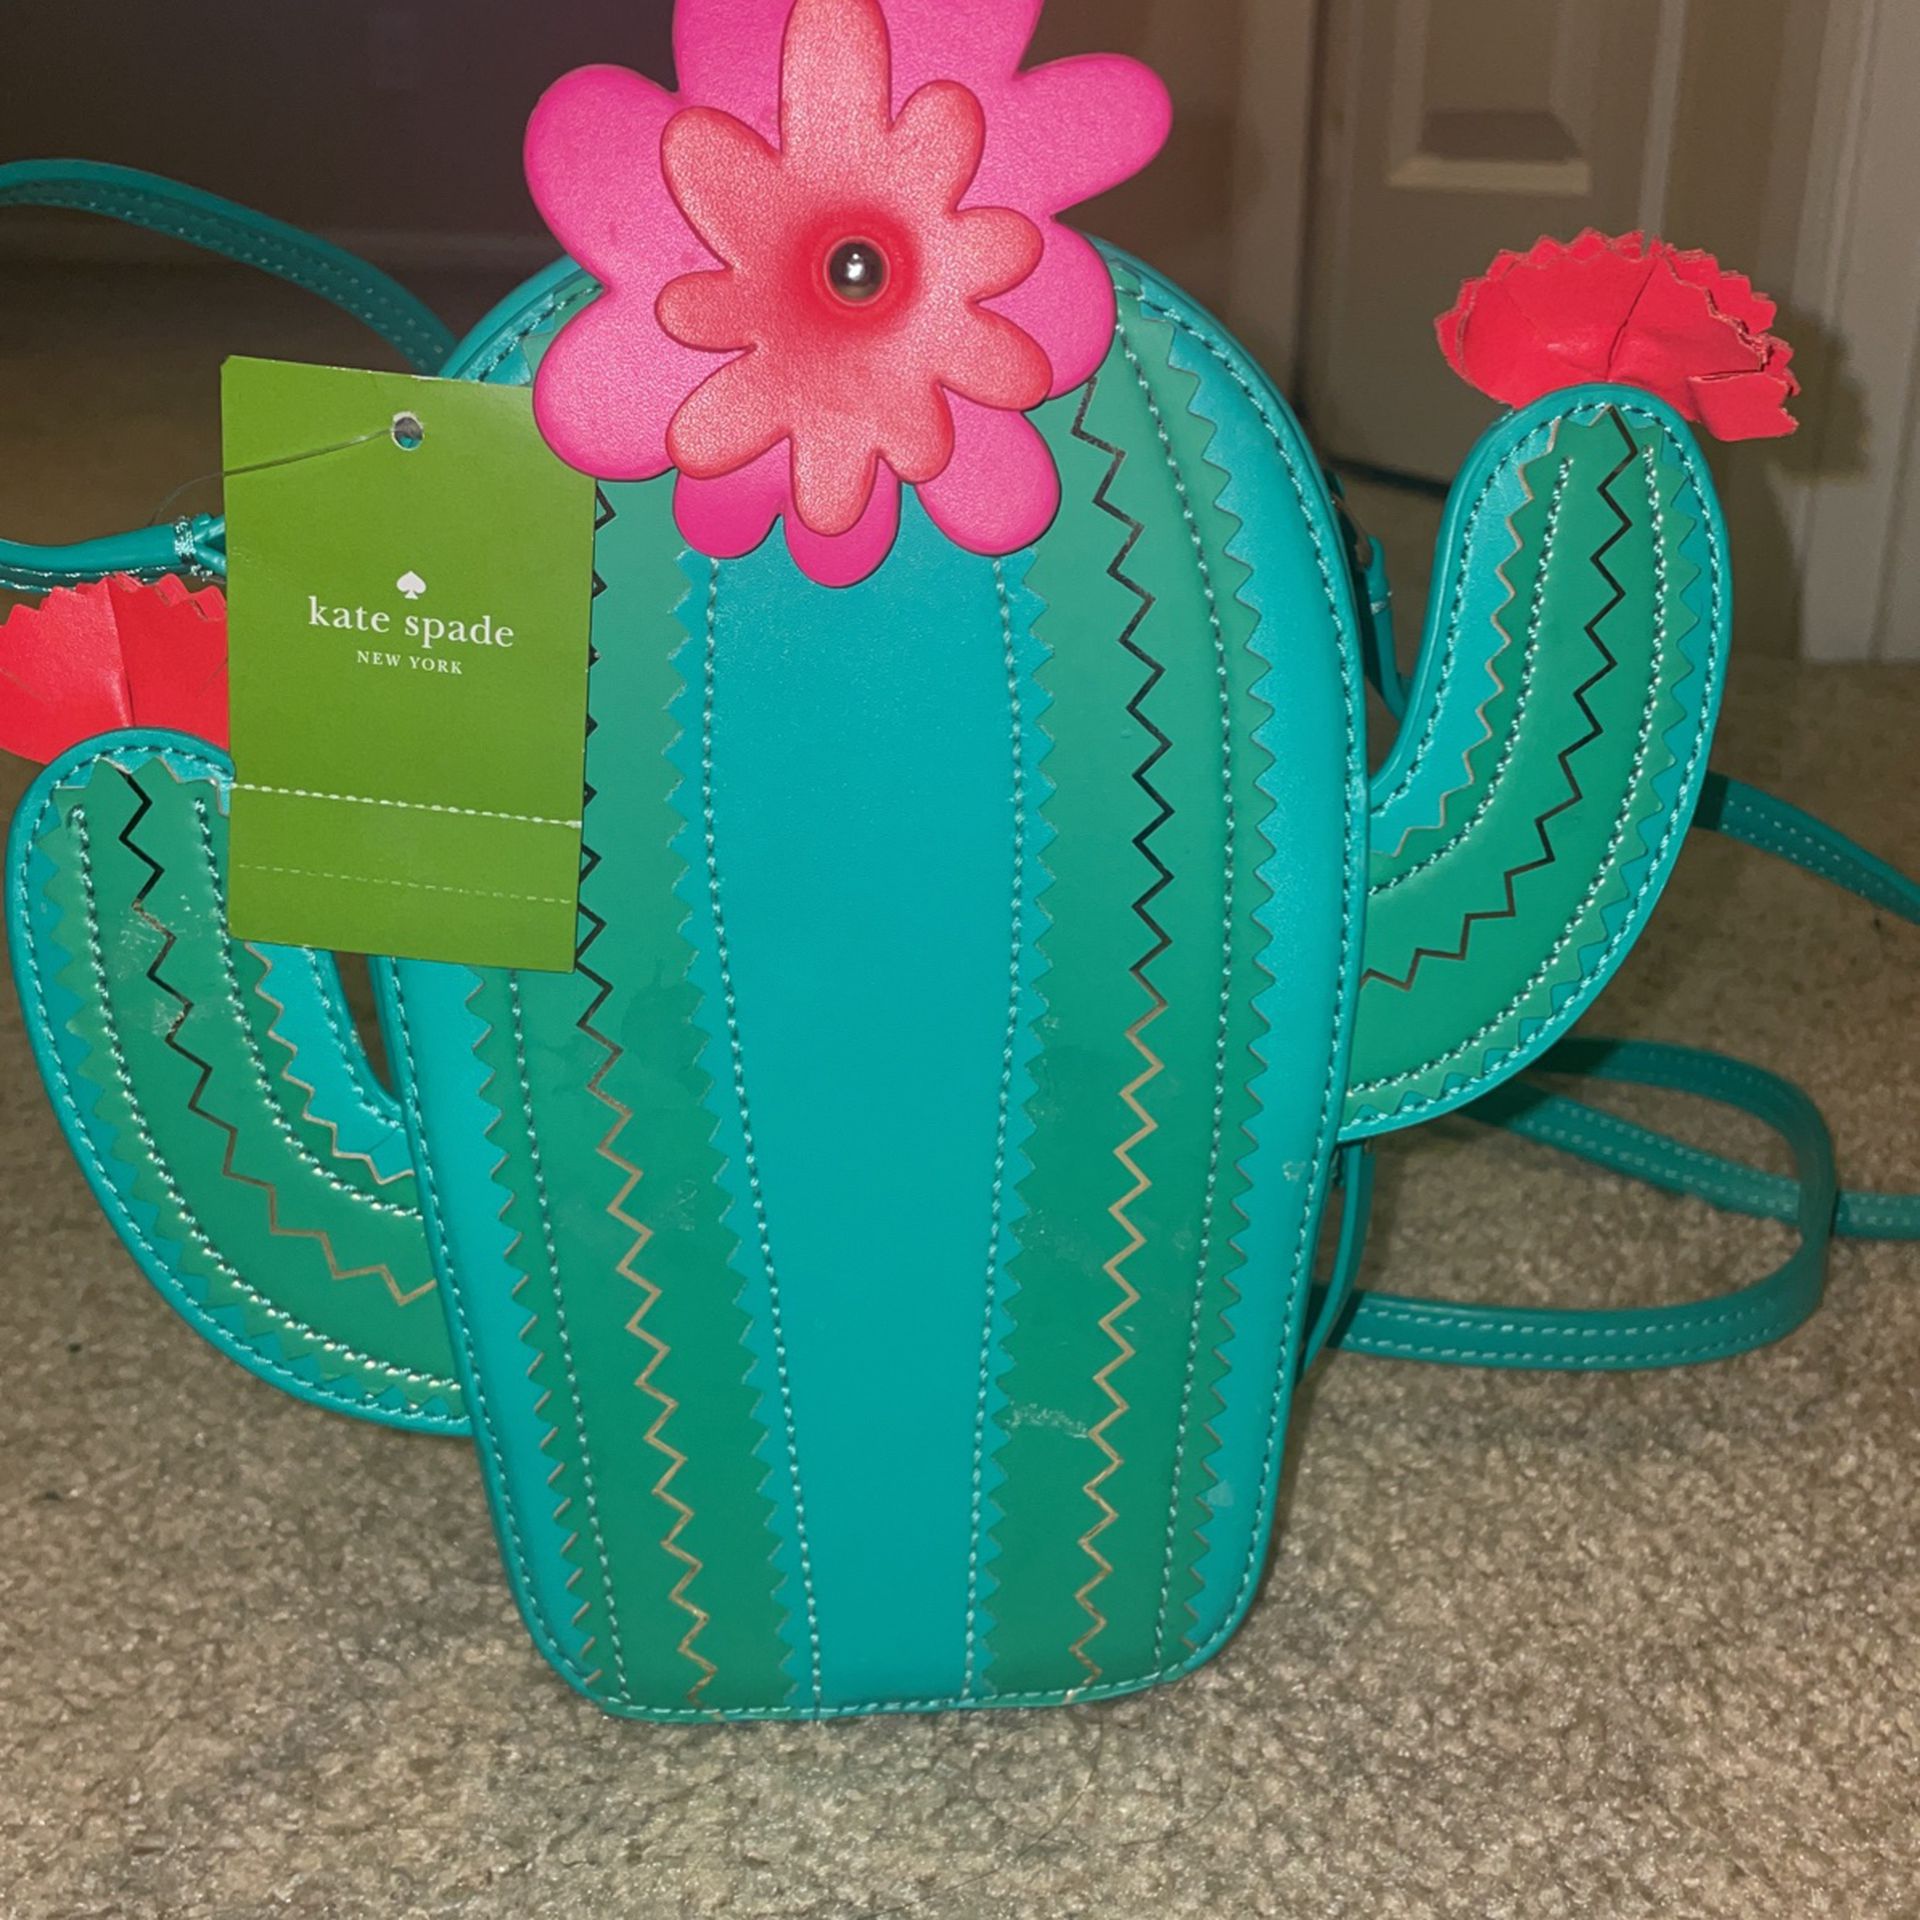 Kate Spade Cactus Handbag